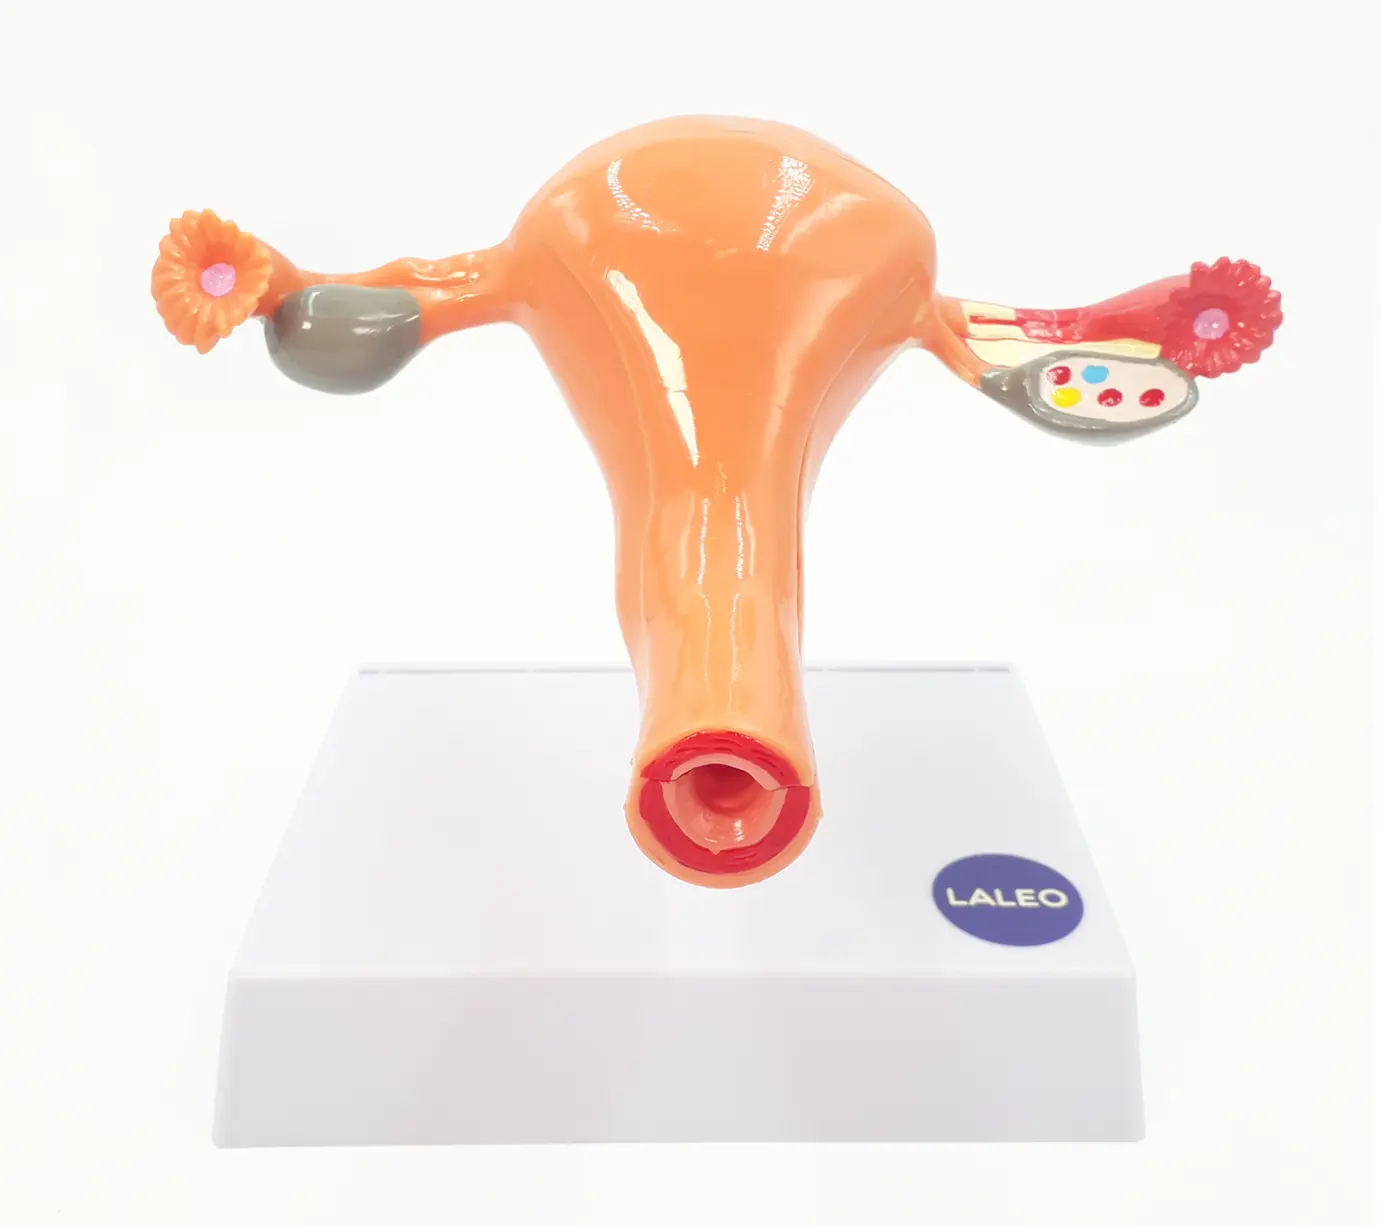 aparato reproductor femenino plastico - Que fabrica el aparato reproductor femenino